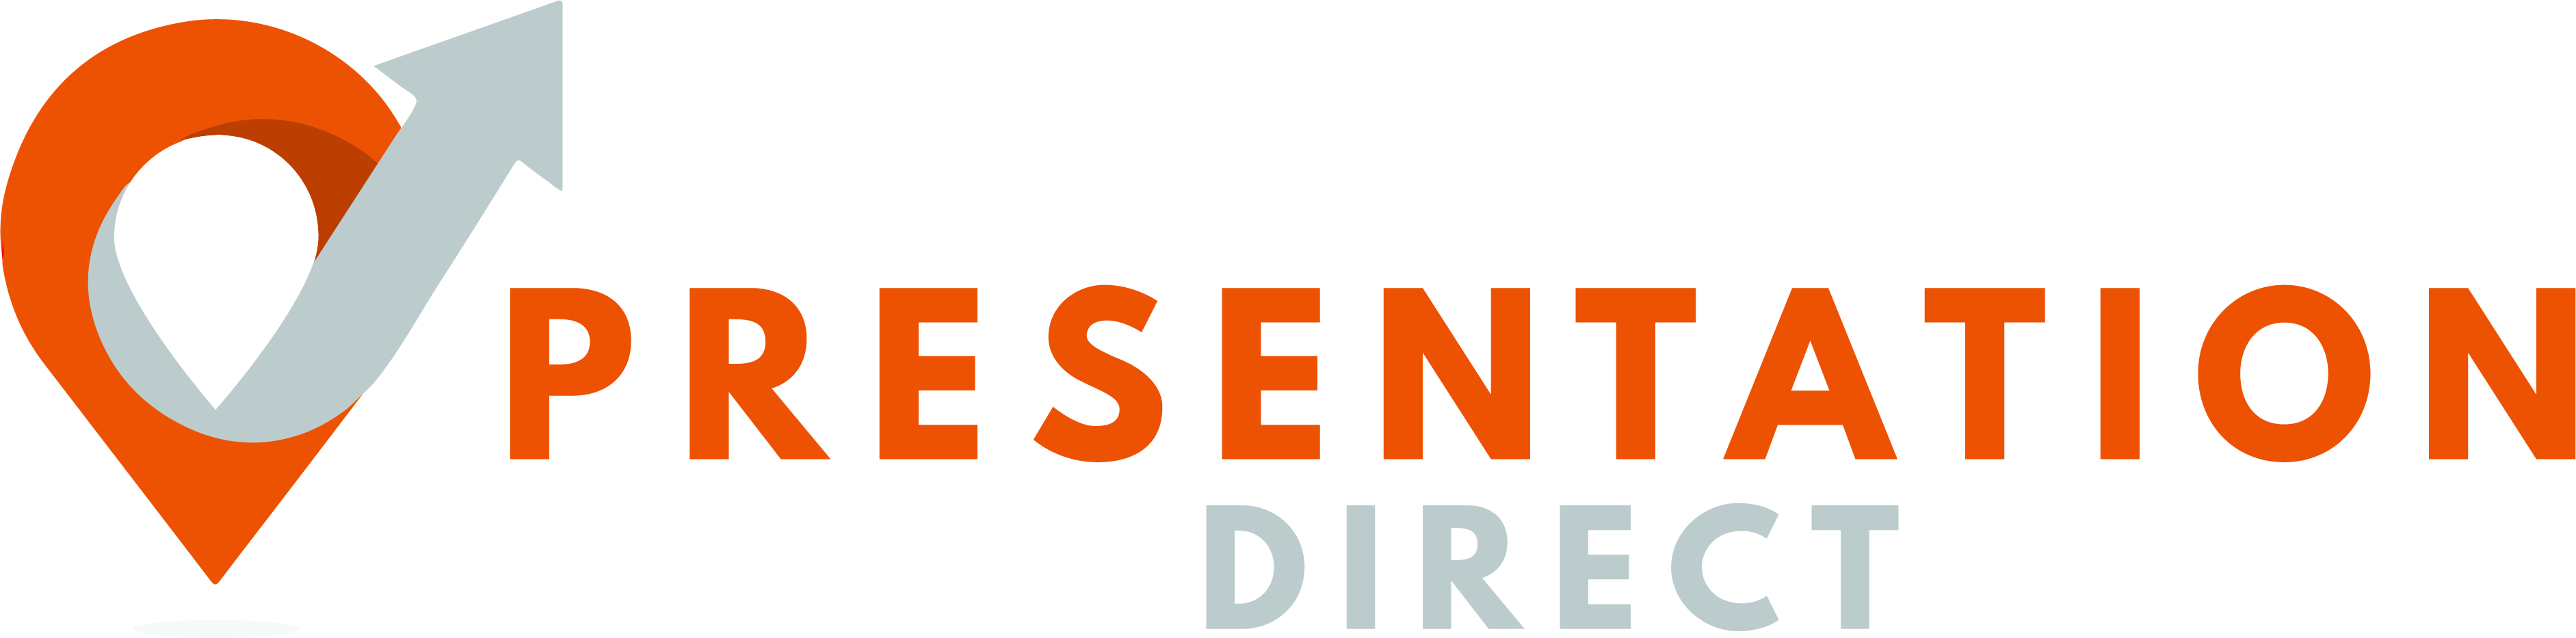 Presentation Direct Logo